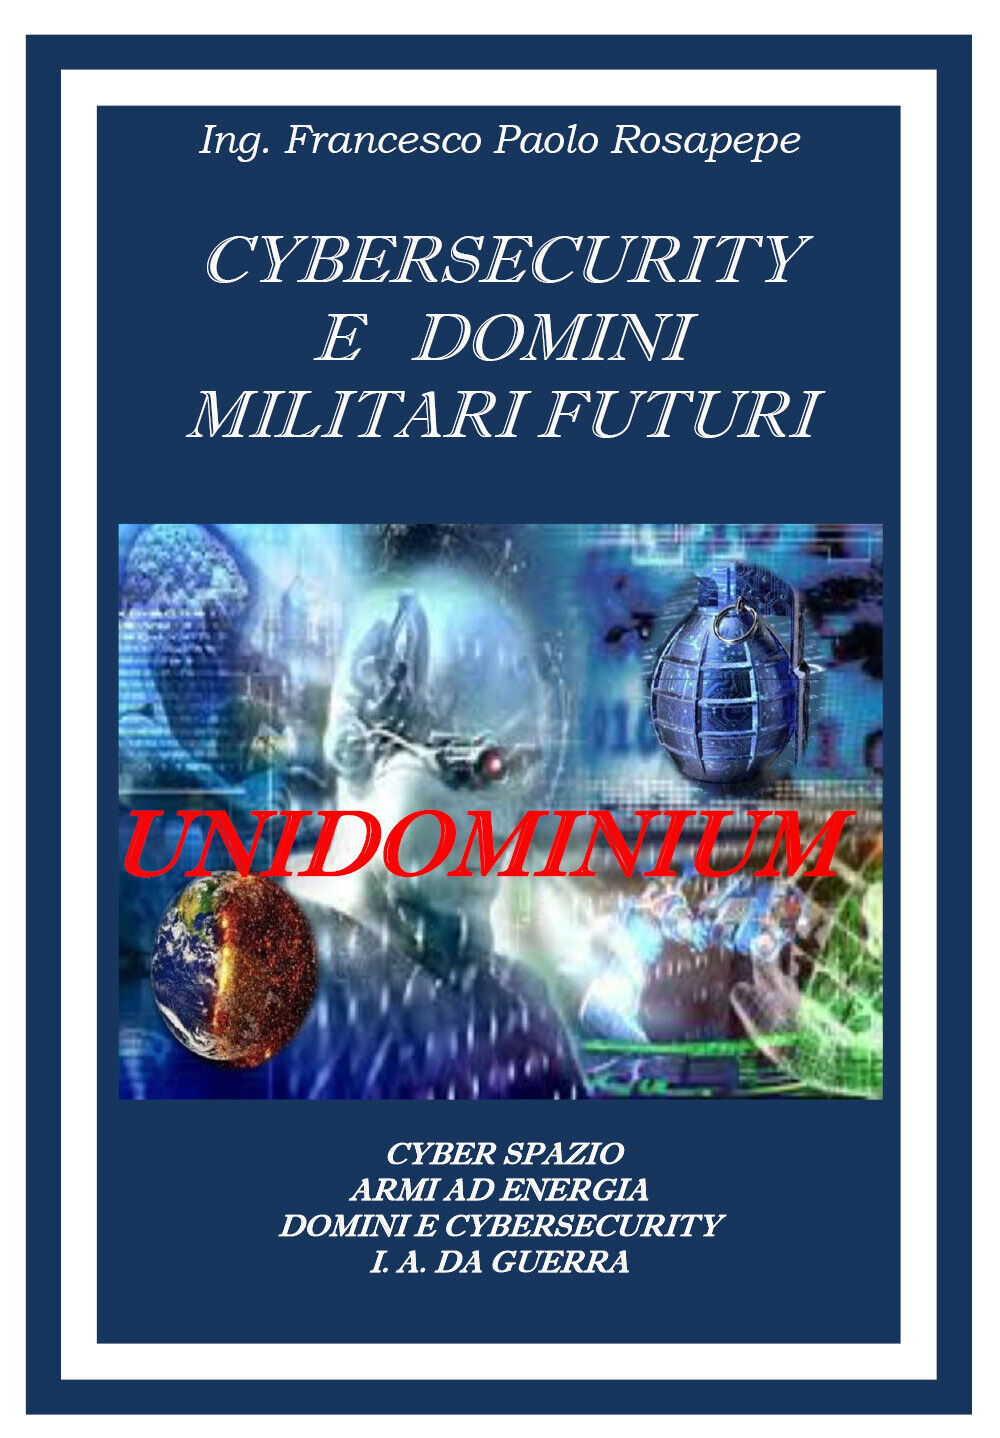 Cybersecurity e domini militari futuri di Francesco Paolo Rosapepe,  2021,  Youc